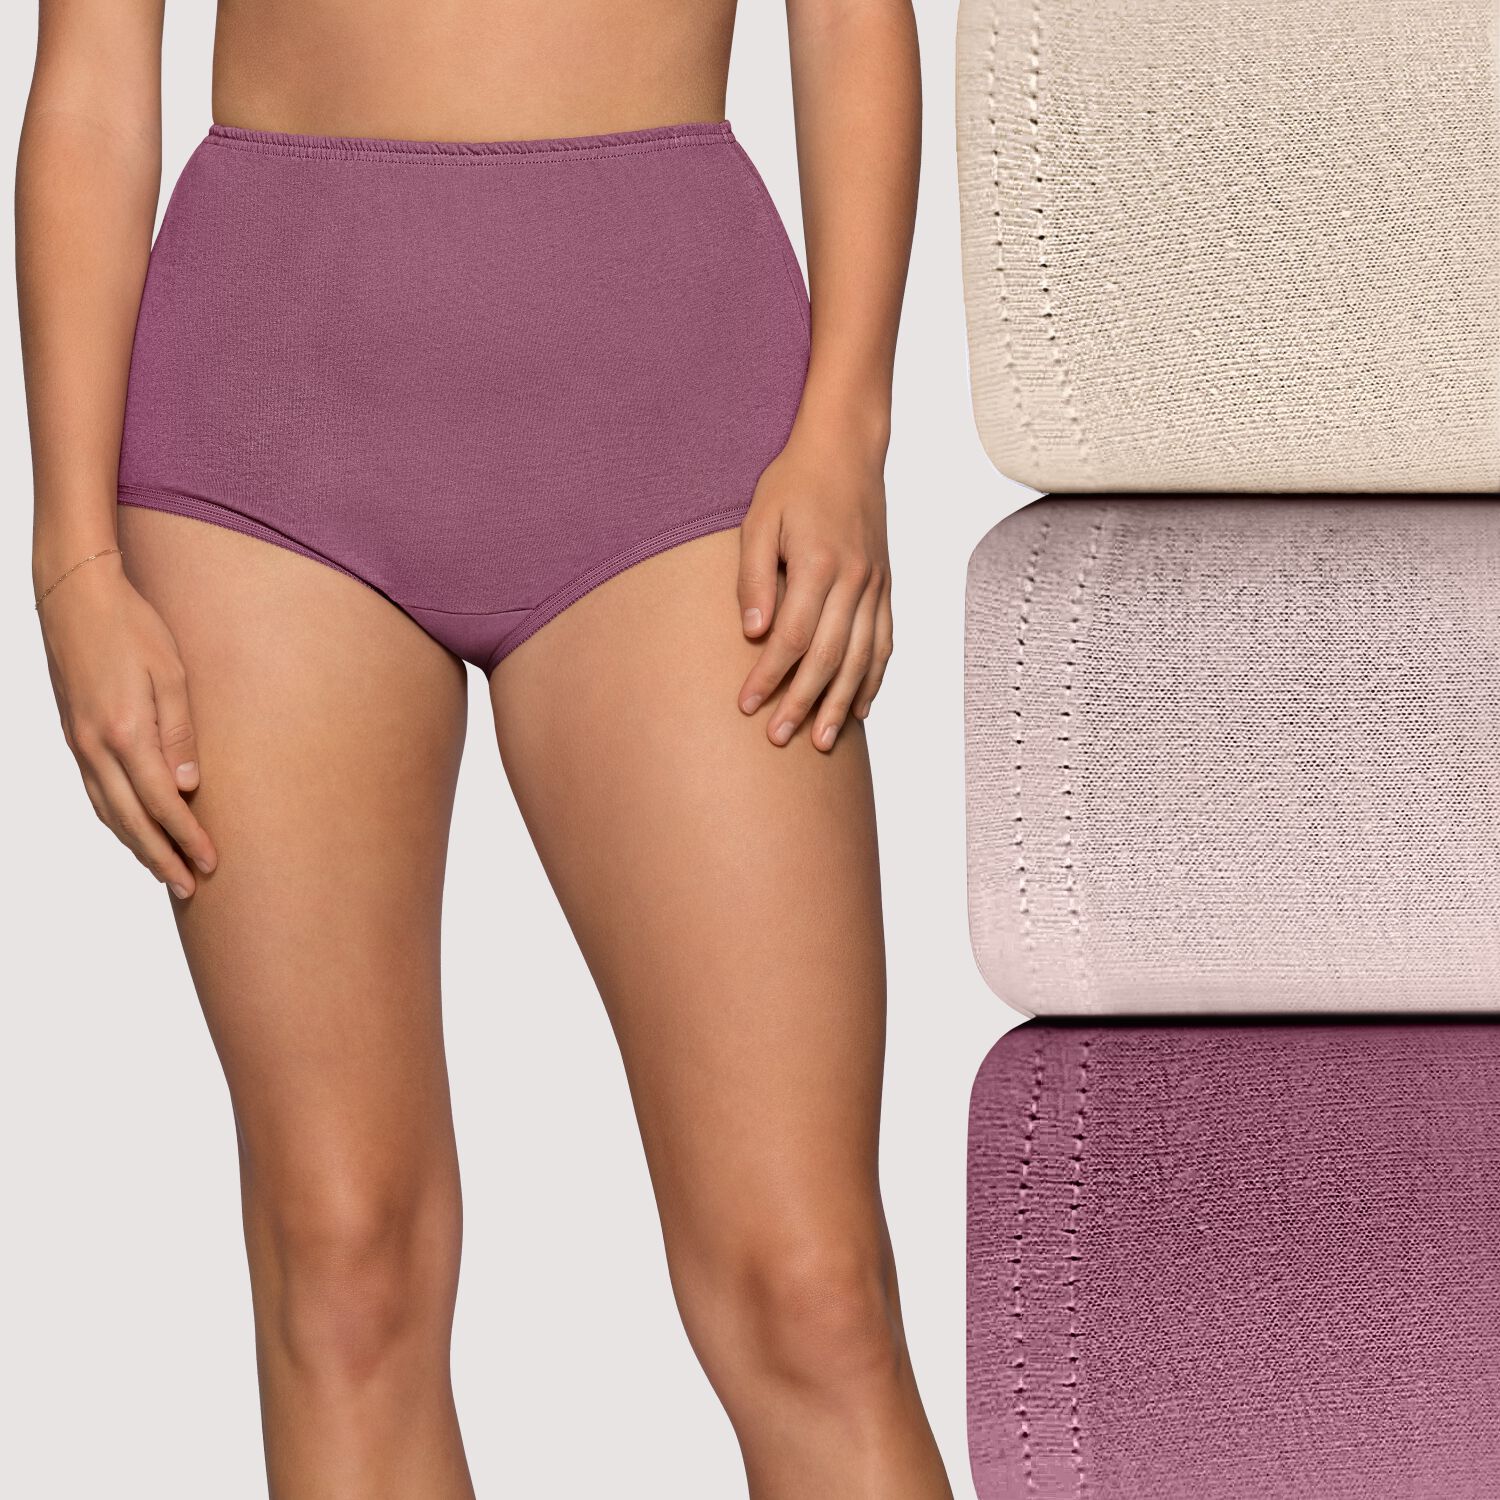 Cotton Underwear for Women Bikini Panty Soft Full Back Coverage Briefs 4  Pack 